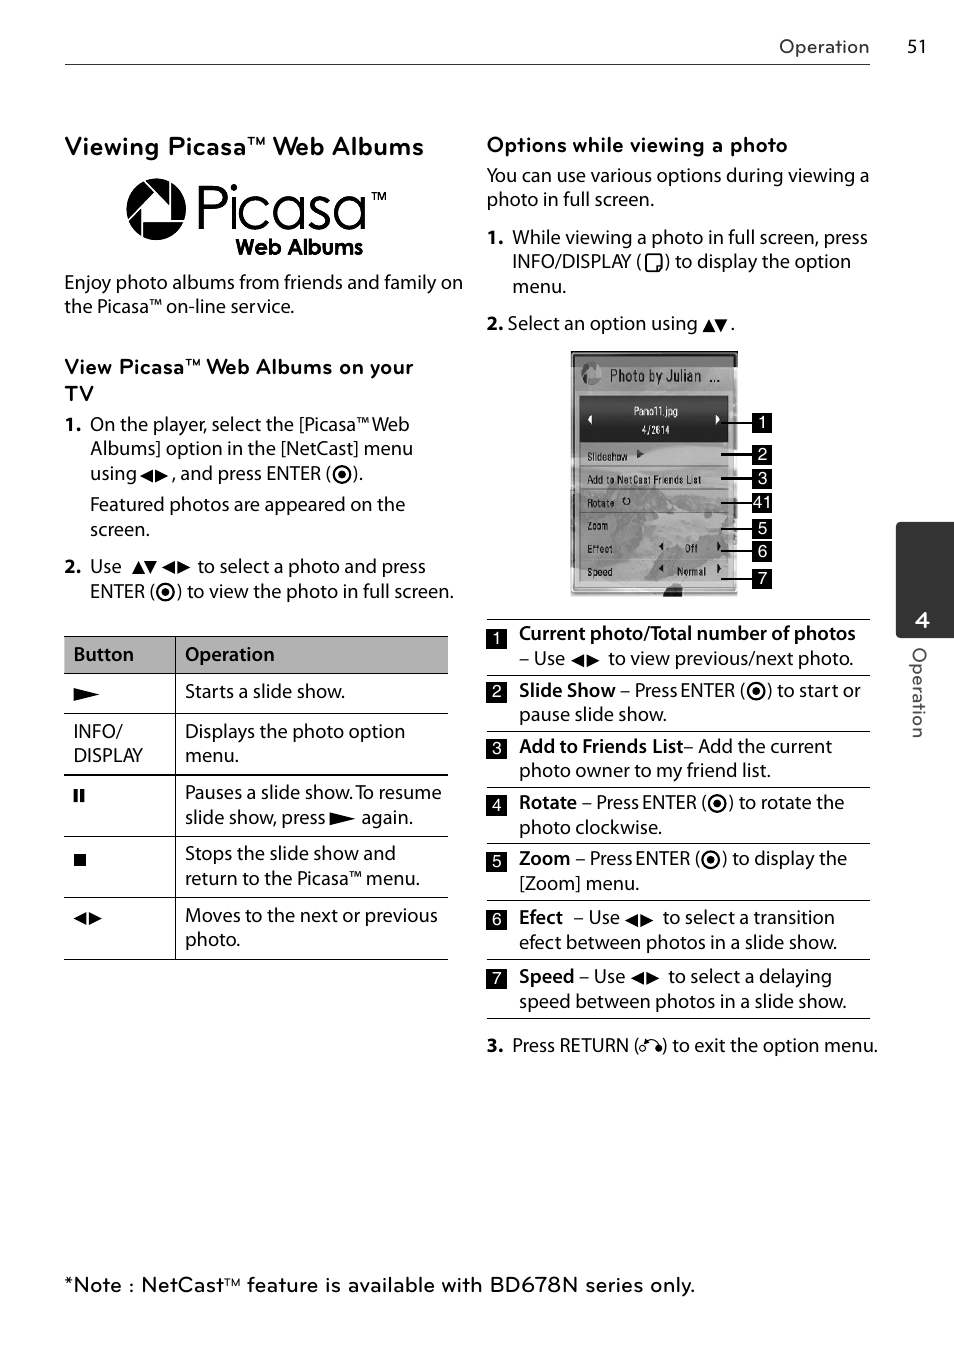 Viewing picasa™ web albums | LG BD678N User Manual | Page 51 / 72